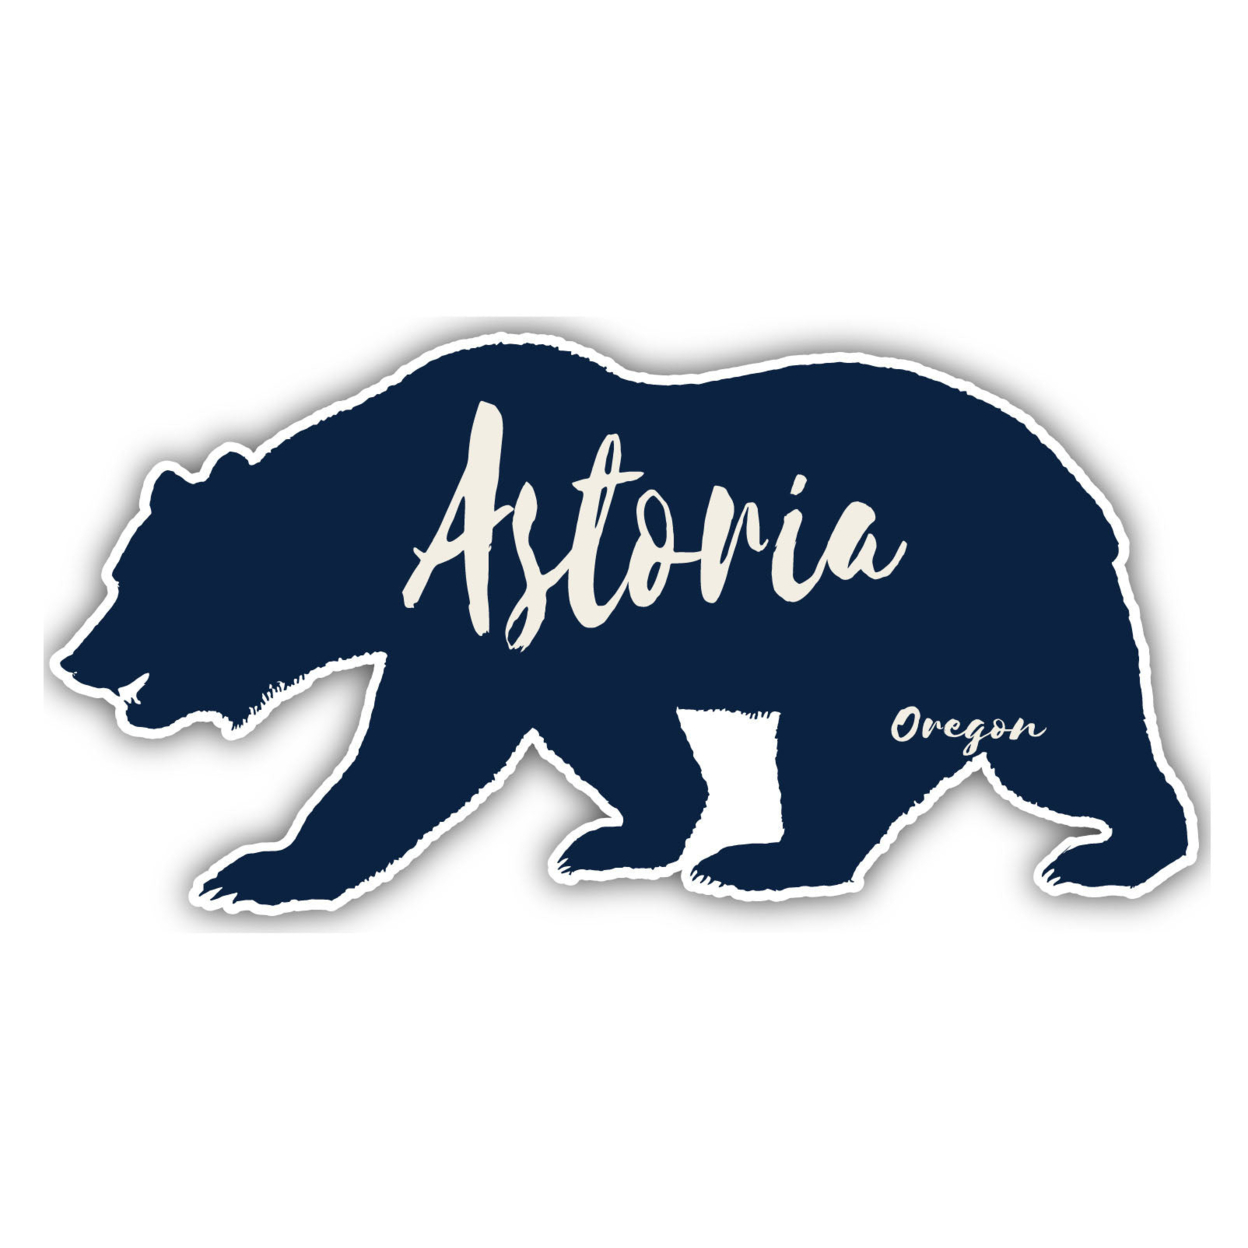 Astoria Oregon Souvenir Decorative Stickers (Choose Theme And Size) - 4-Pack, 8-Inch, Camp Life